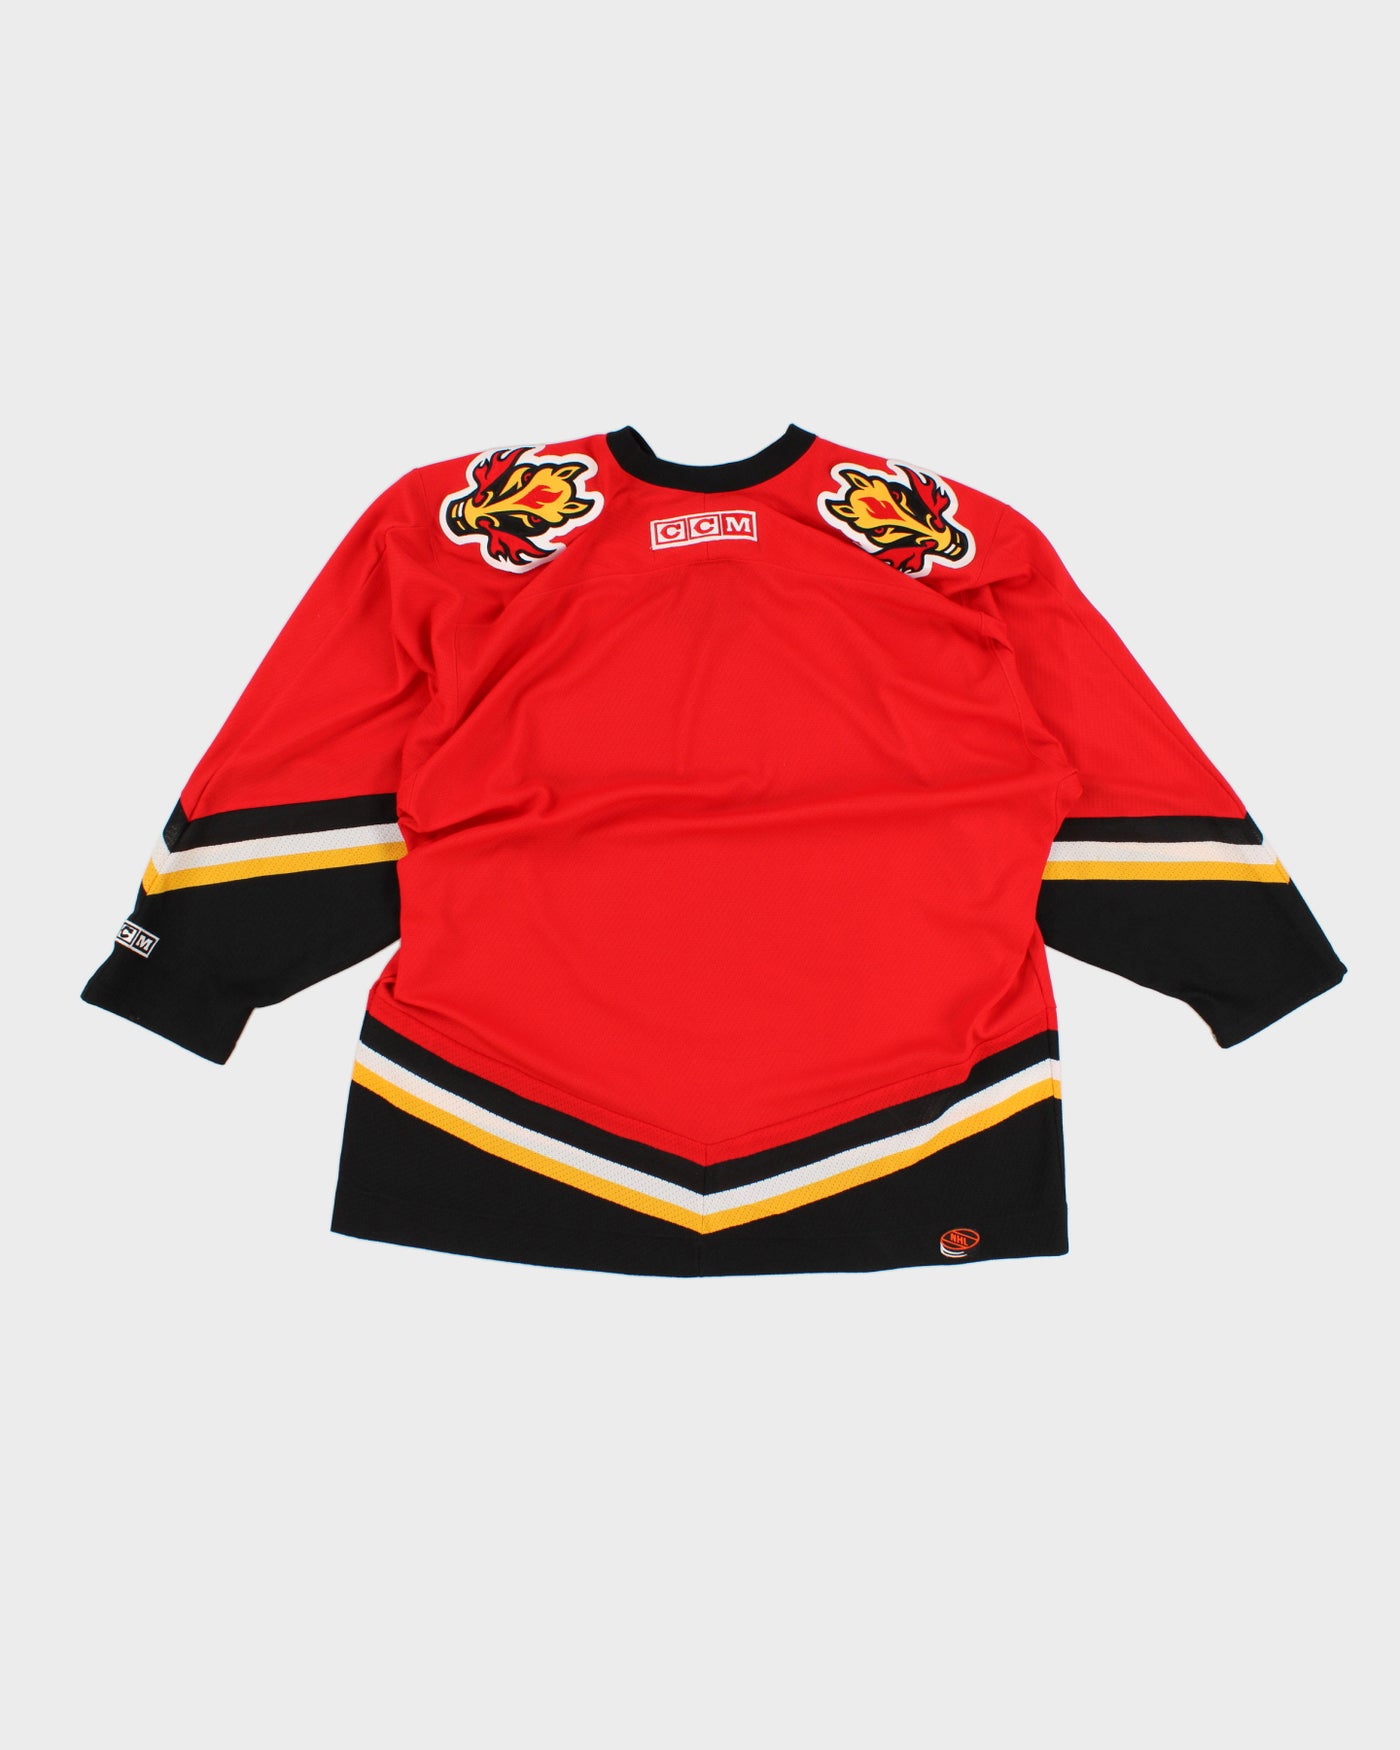 NHL x Calgary Flames NHL Hockey Jersey - L